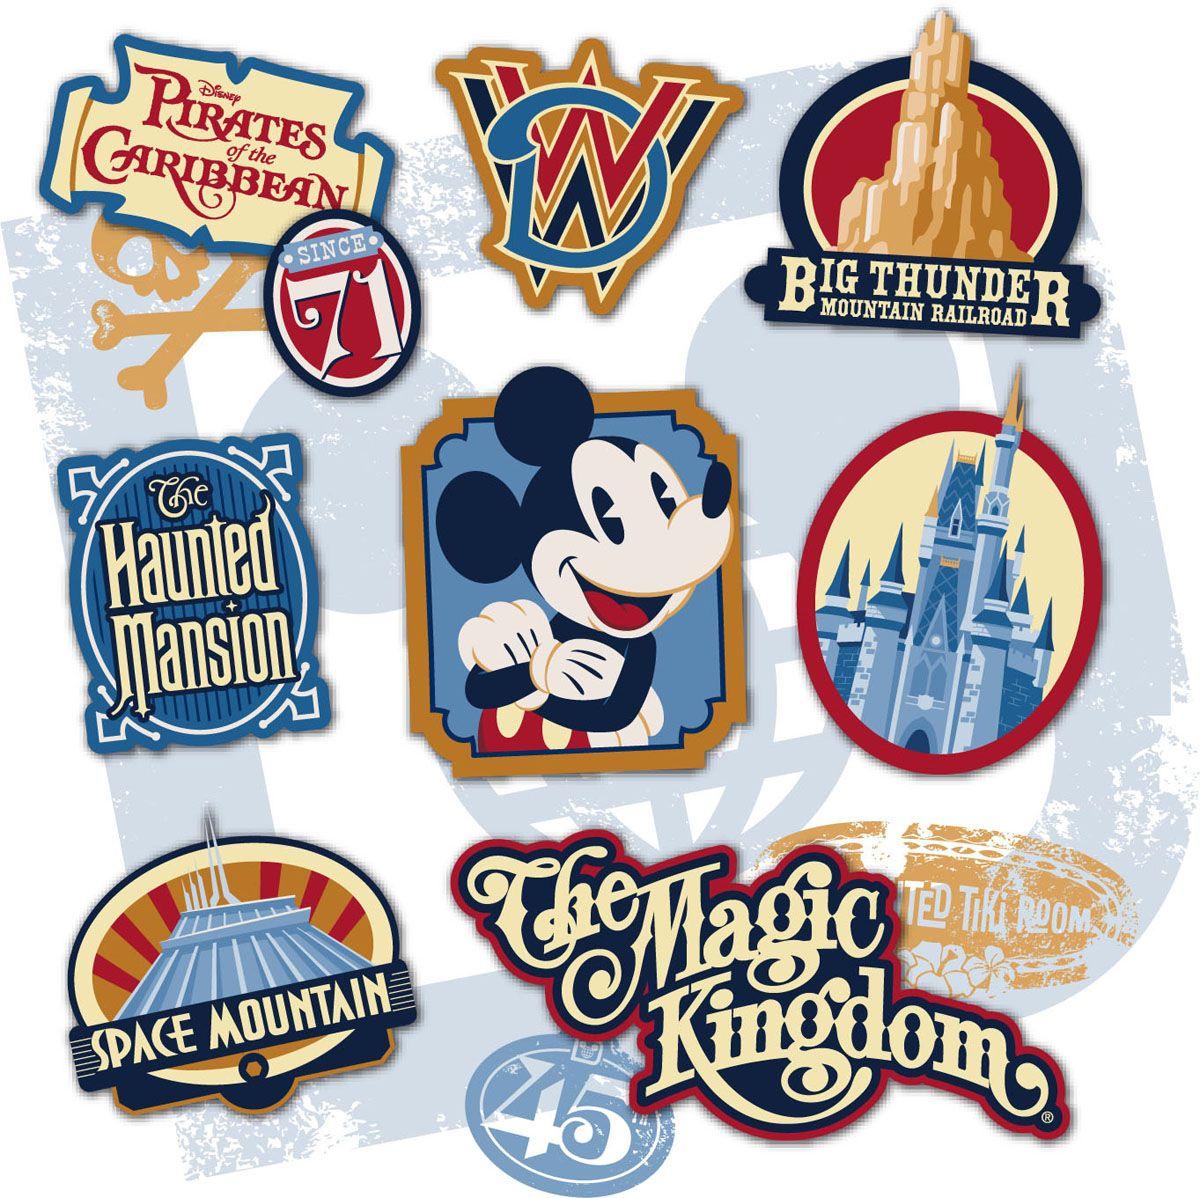 2017 Disney Parks Logo - First Look at Magic Kingdom 45th Anniversary Merchandise Artwork ...